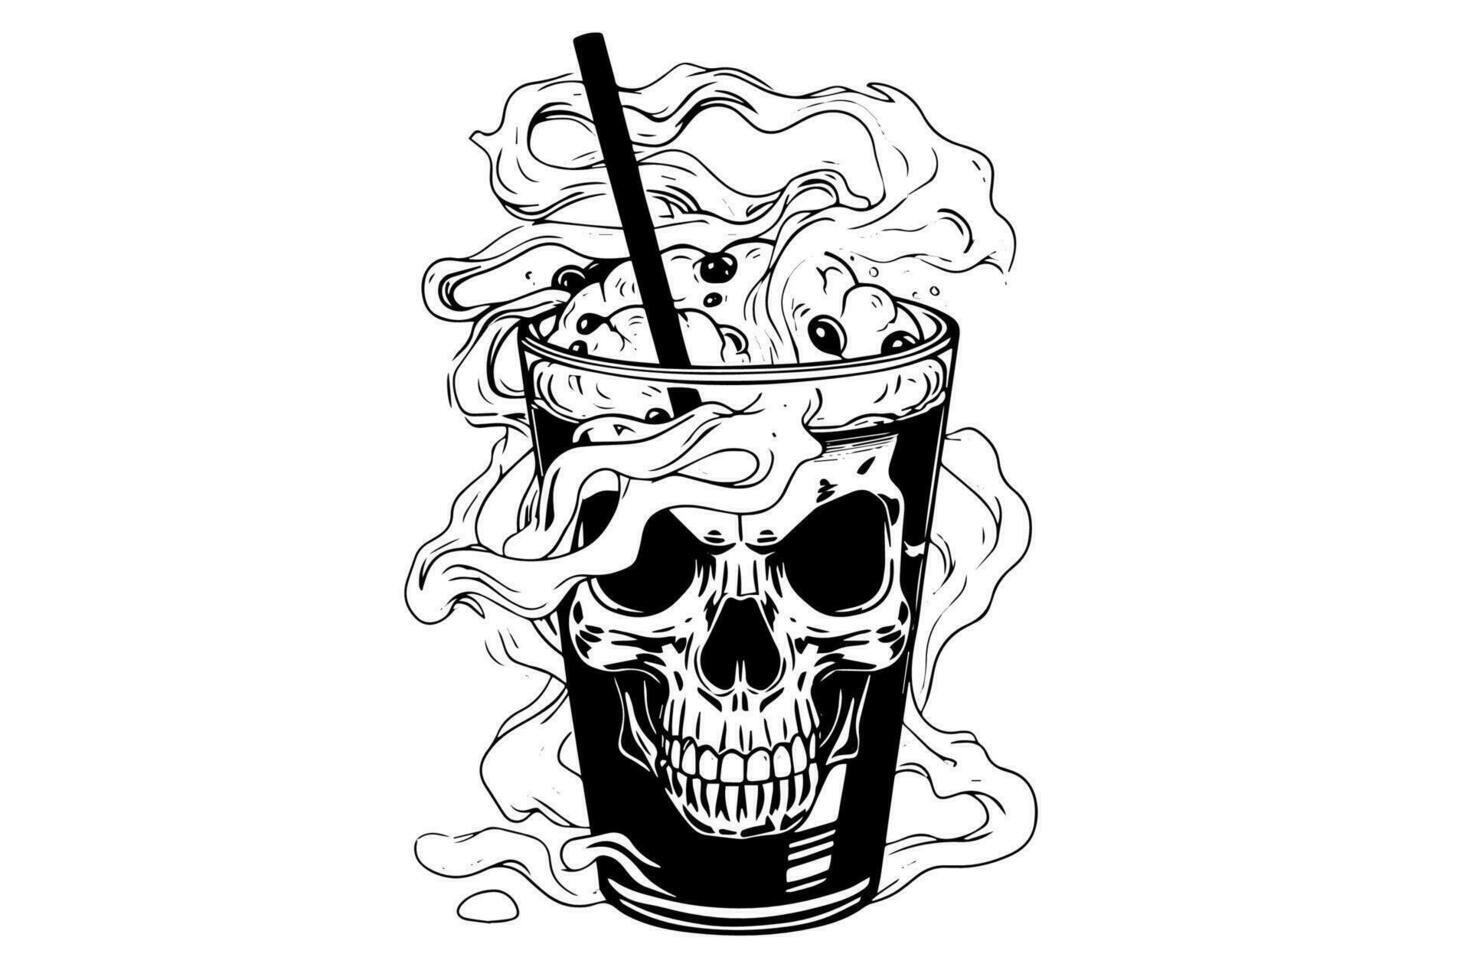 Zombie halloween cocktail drink ink sketch. Walking dead hand drawing vector illustration.